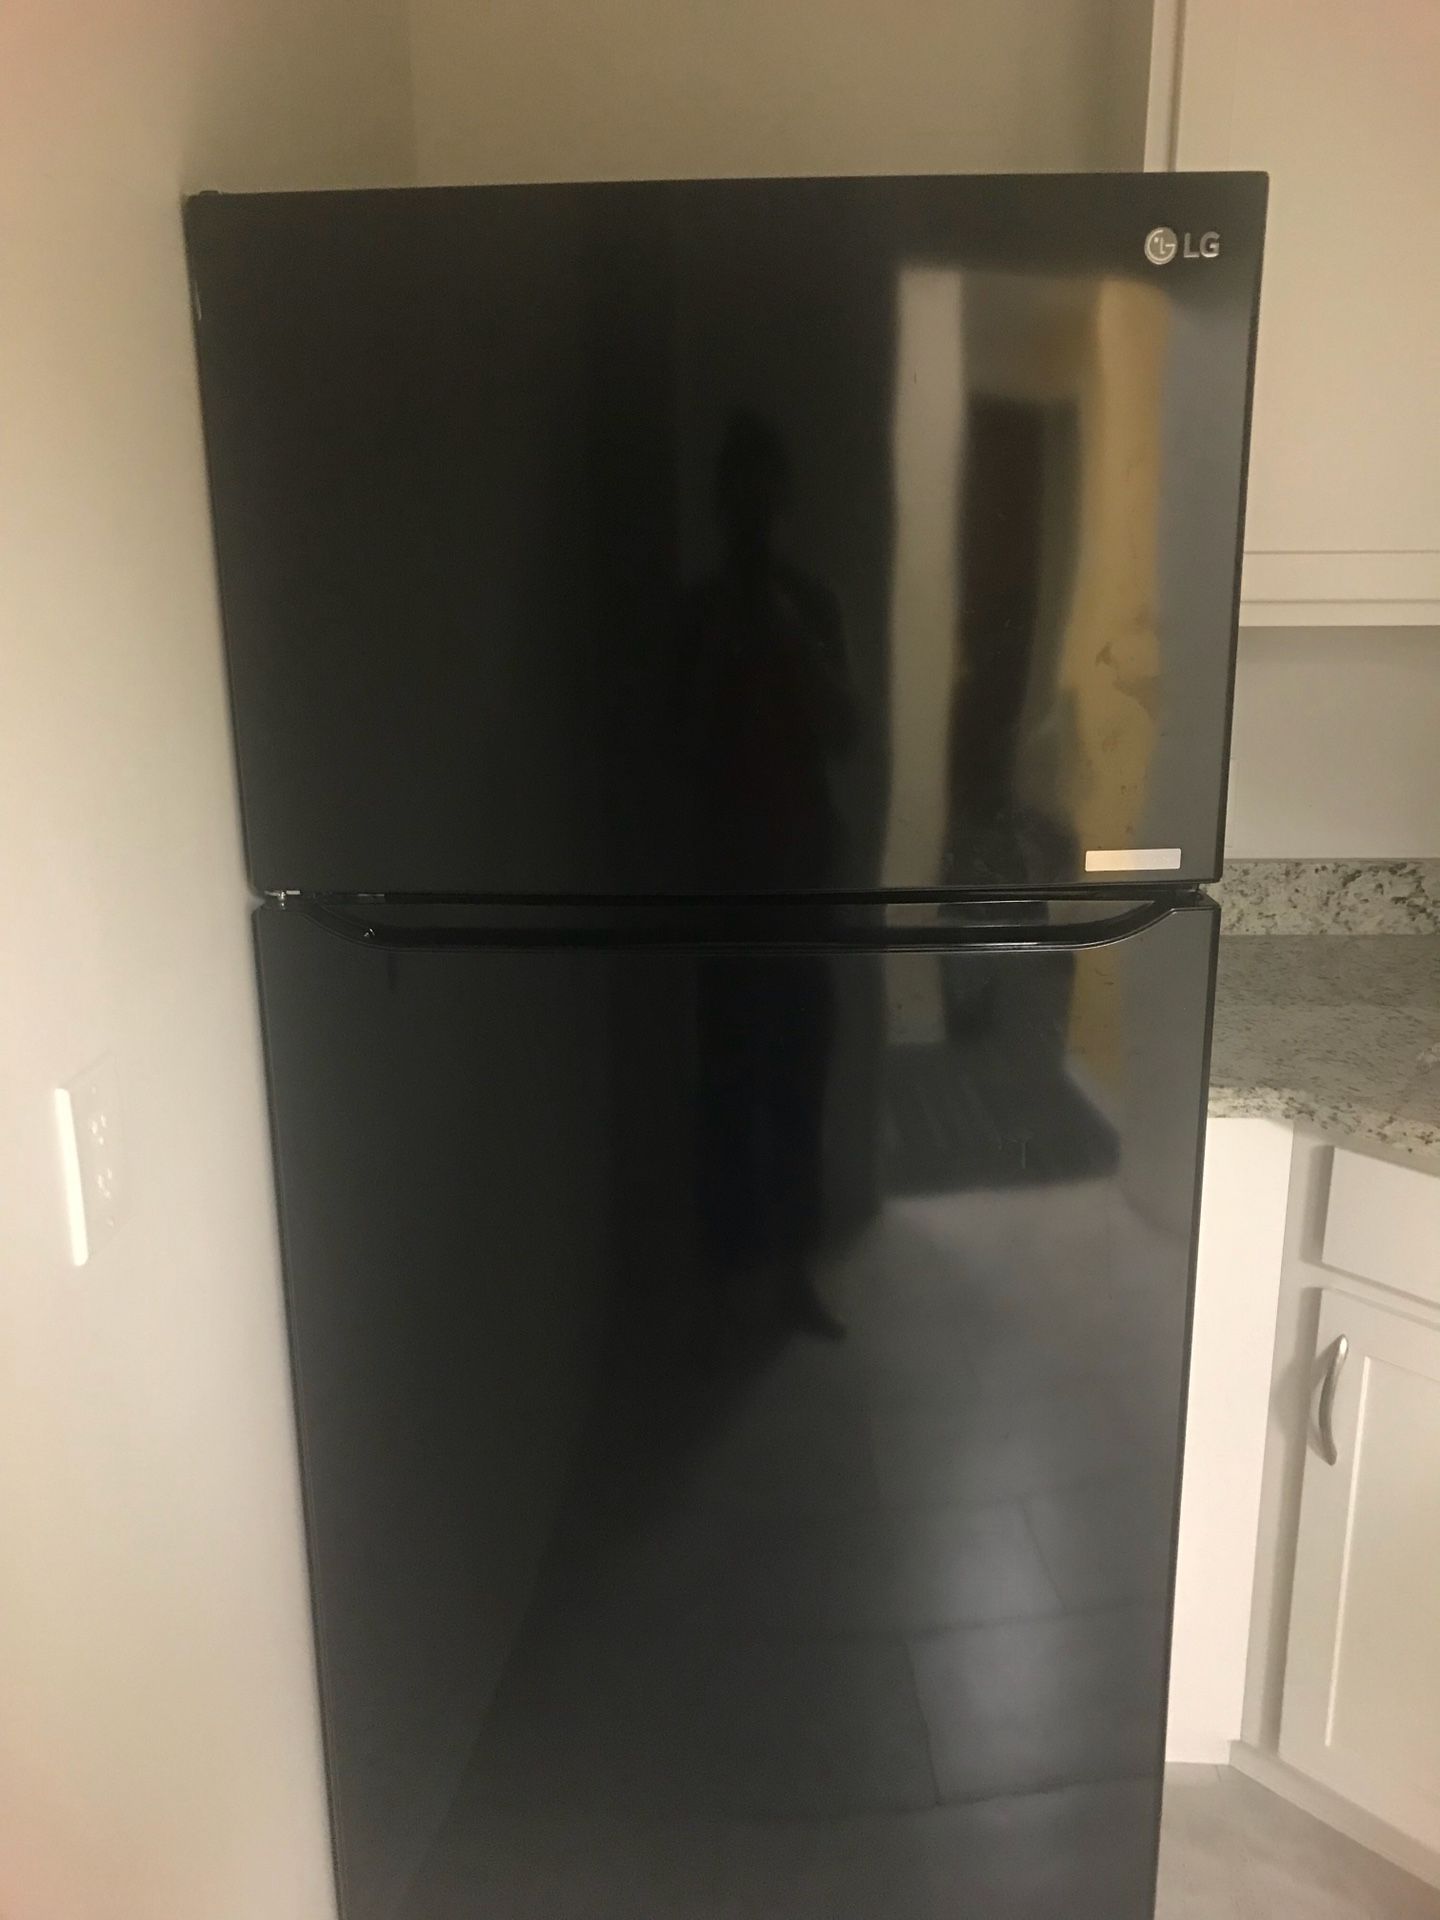 LG Large Capacity Top Freezer Refrigerator w/Ice Maker